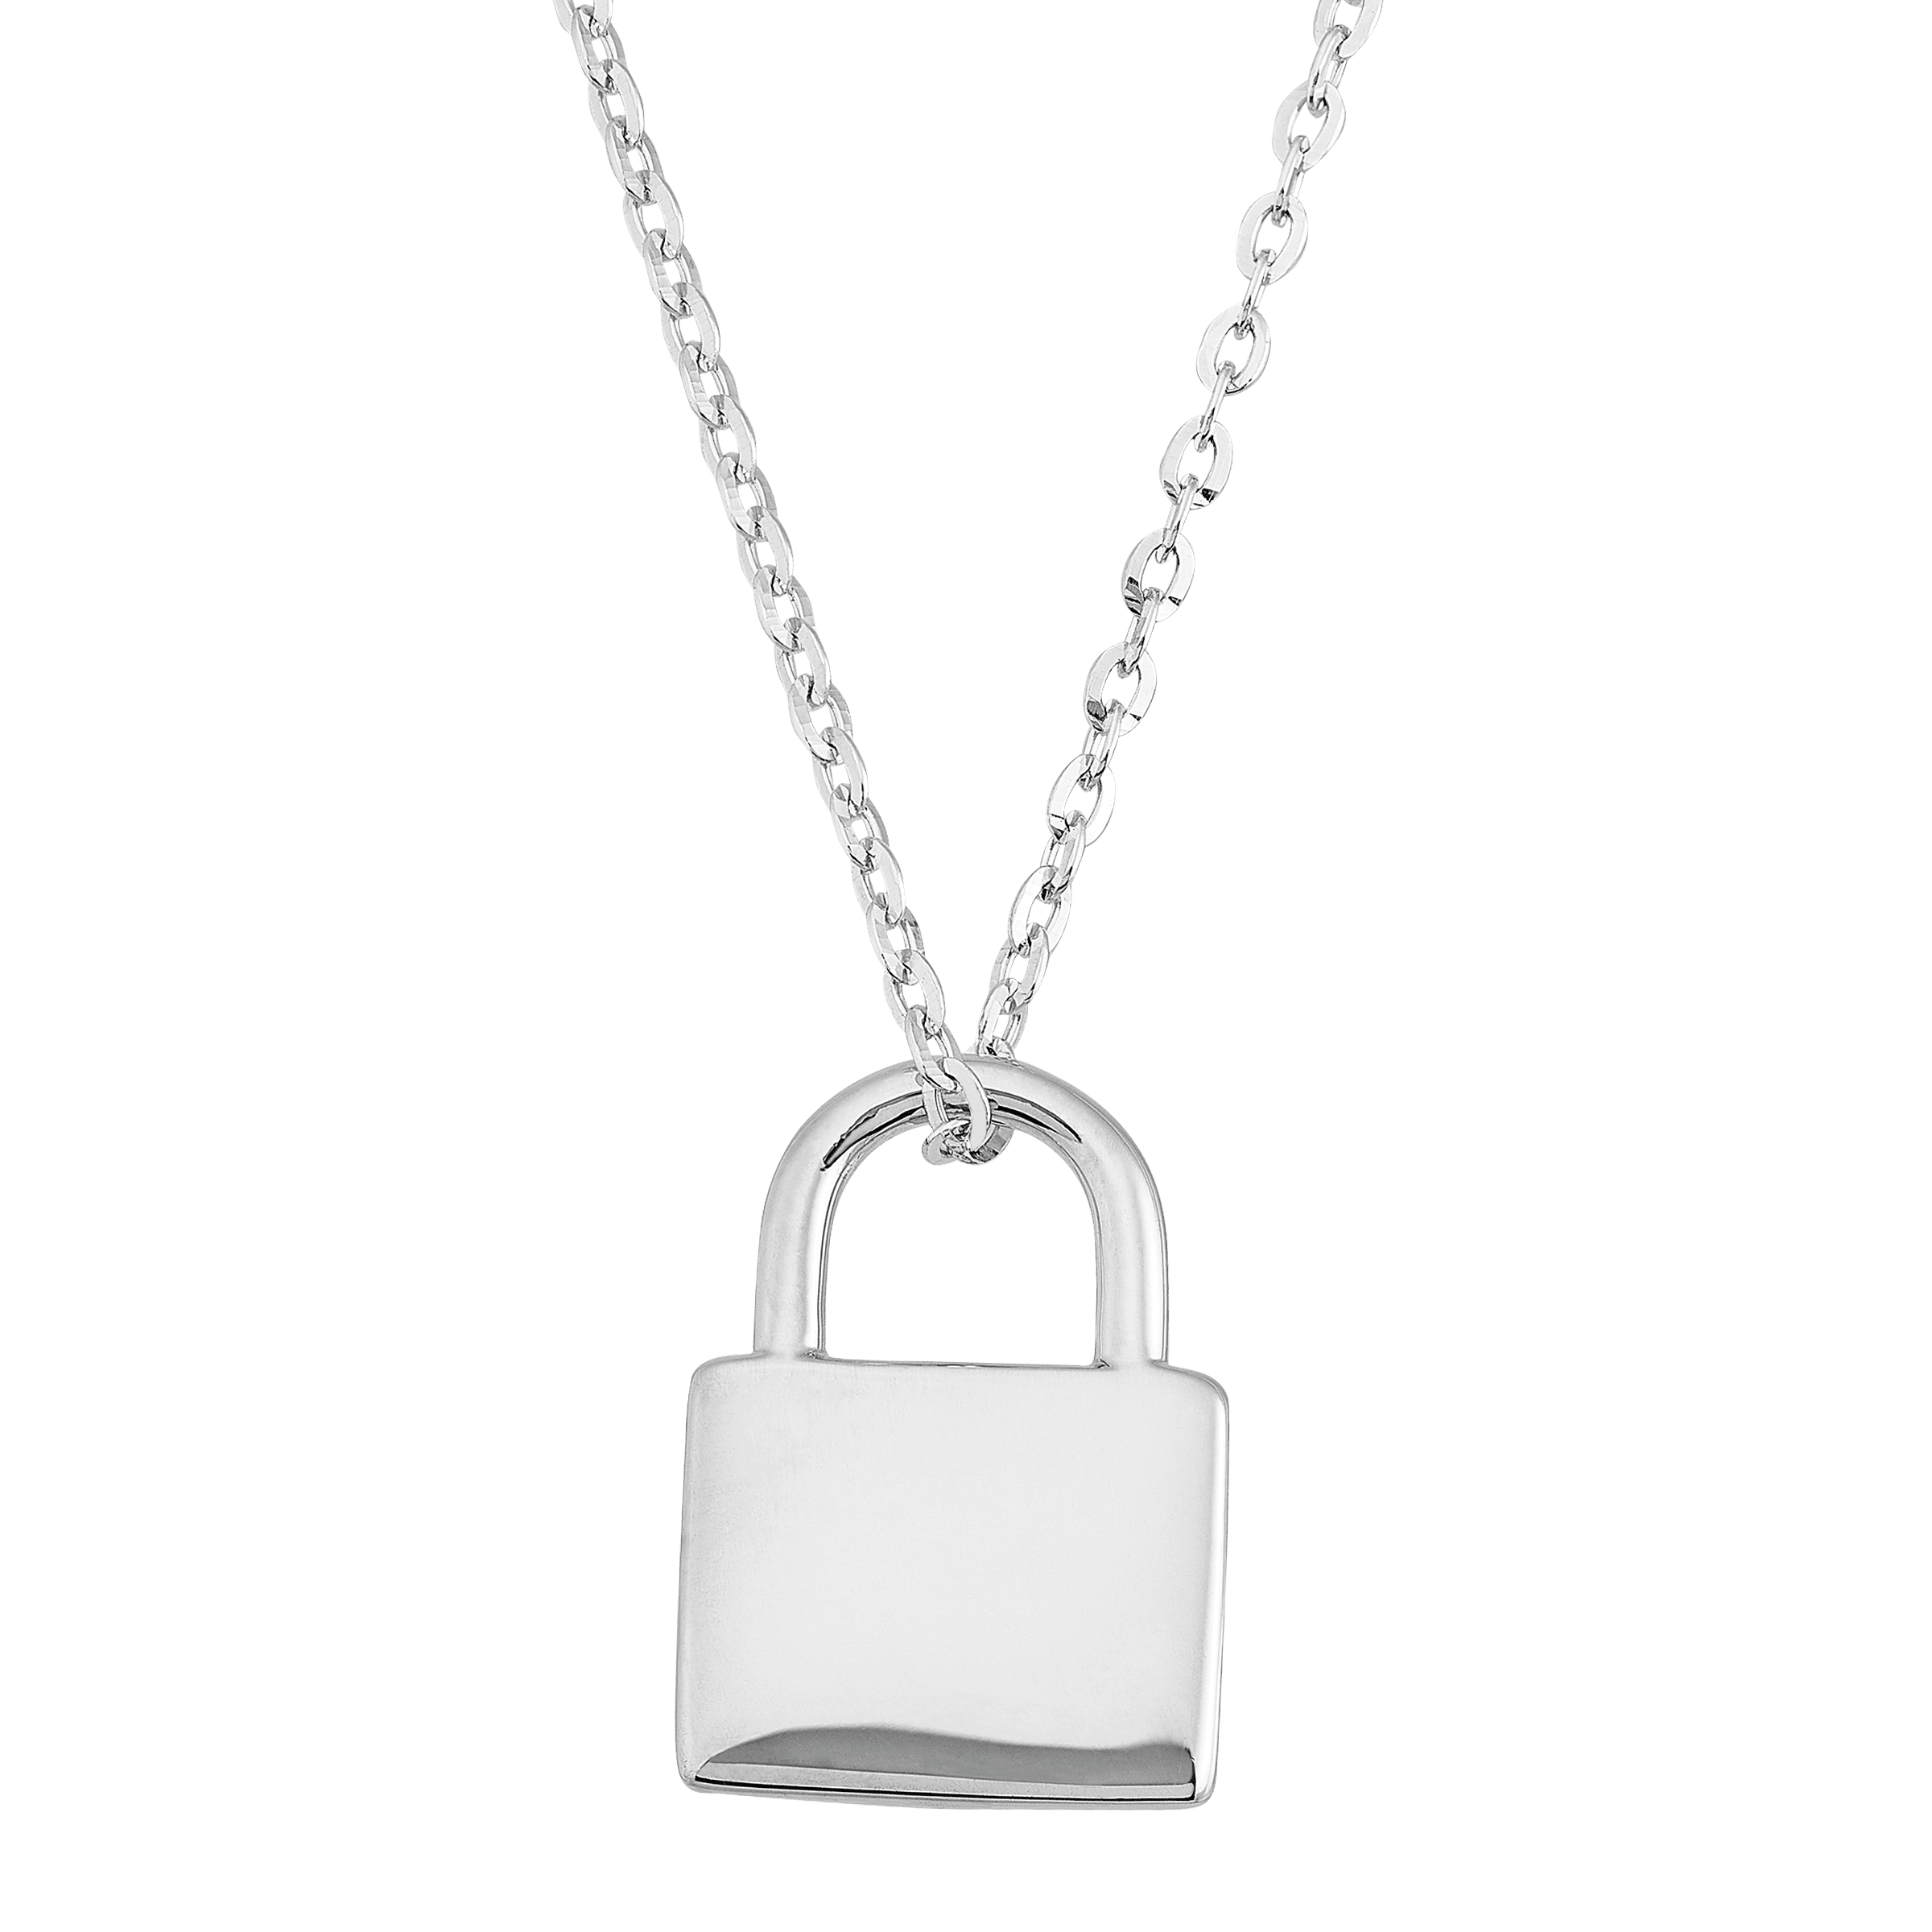 Teeny Tiny Padlock Necklace, 100% Sterling Silver, Silver Lock Choker,  Petite REAL Padlock, Opens & Closes, #944